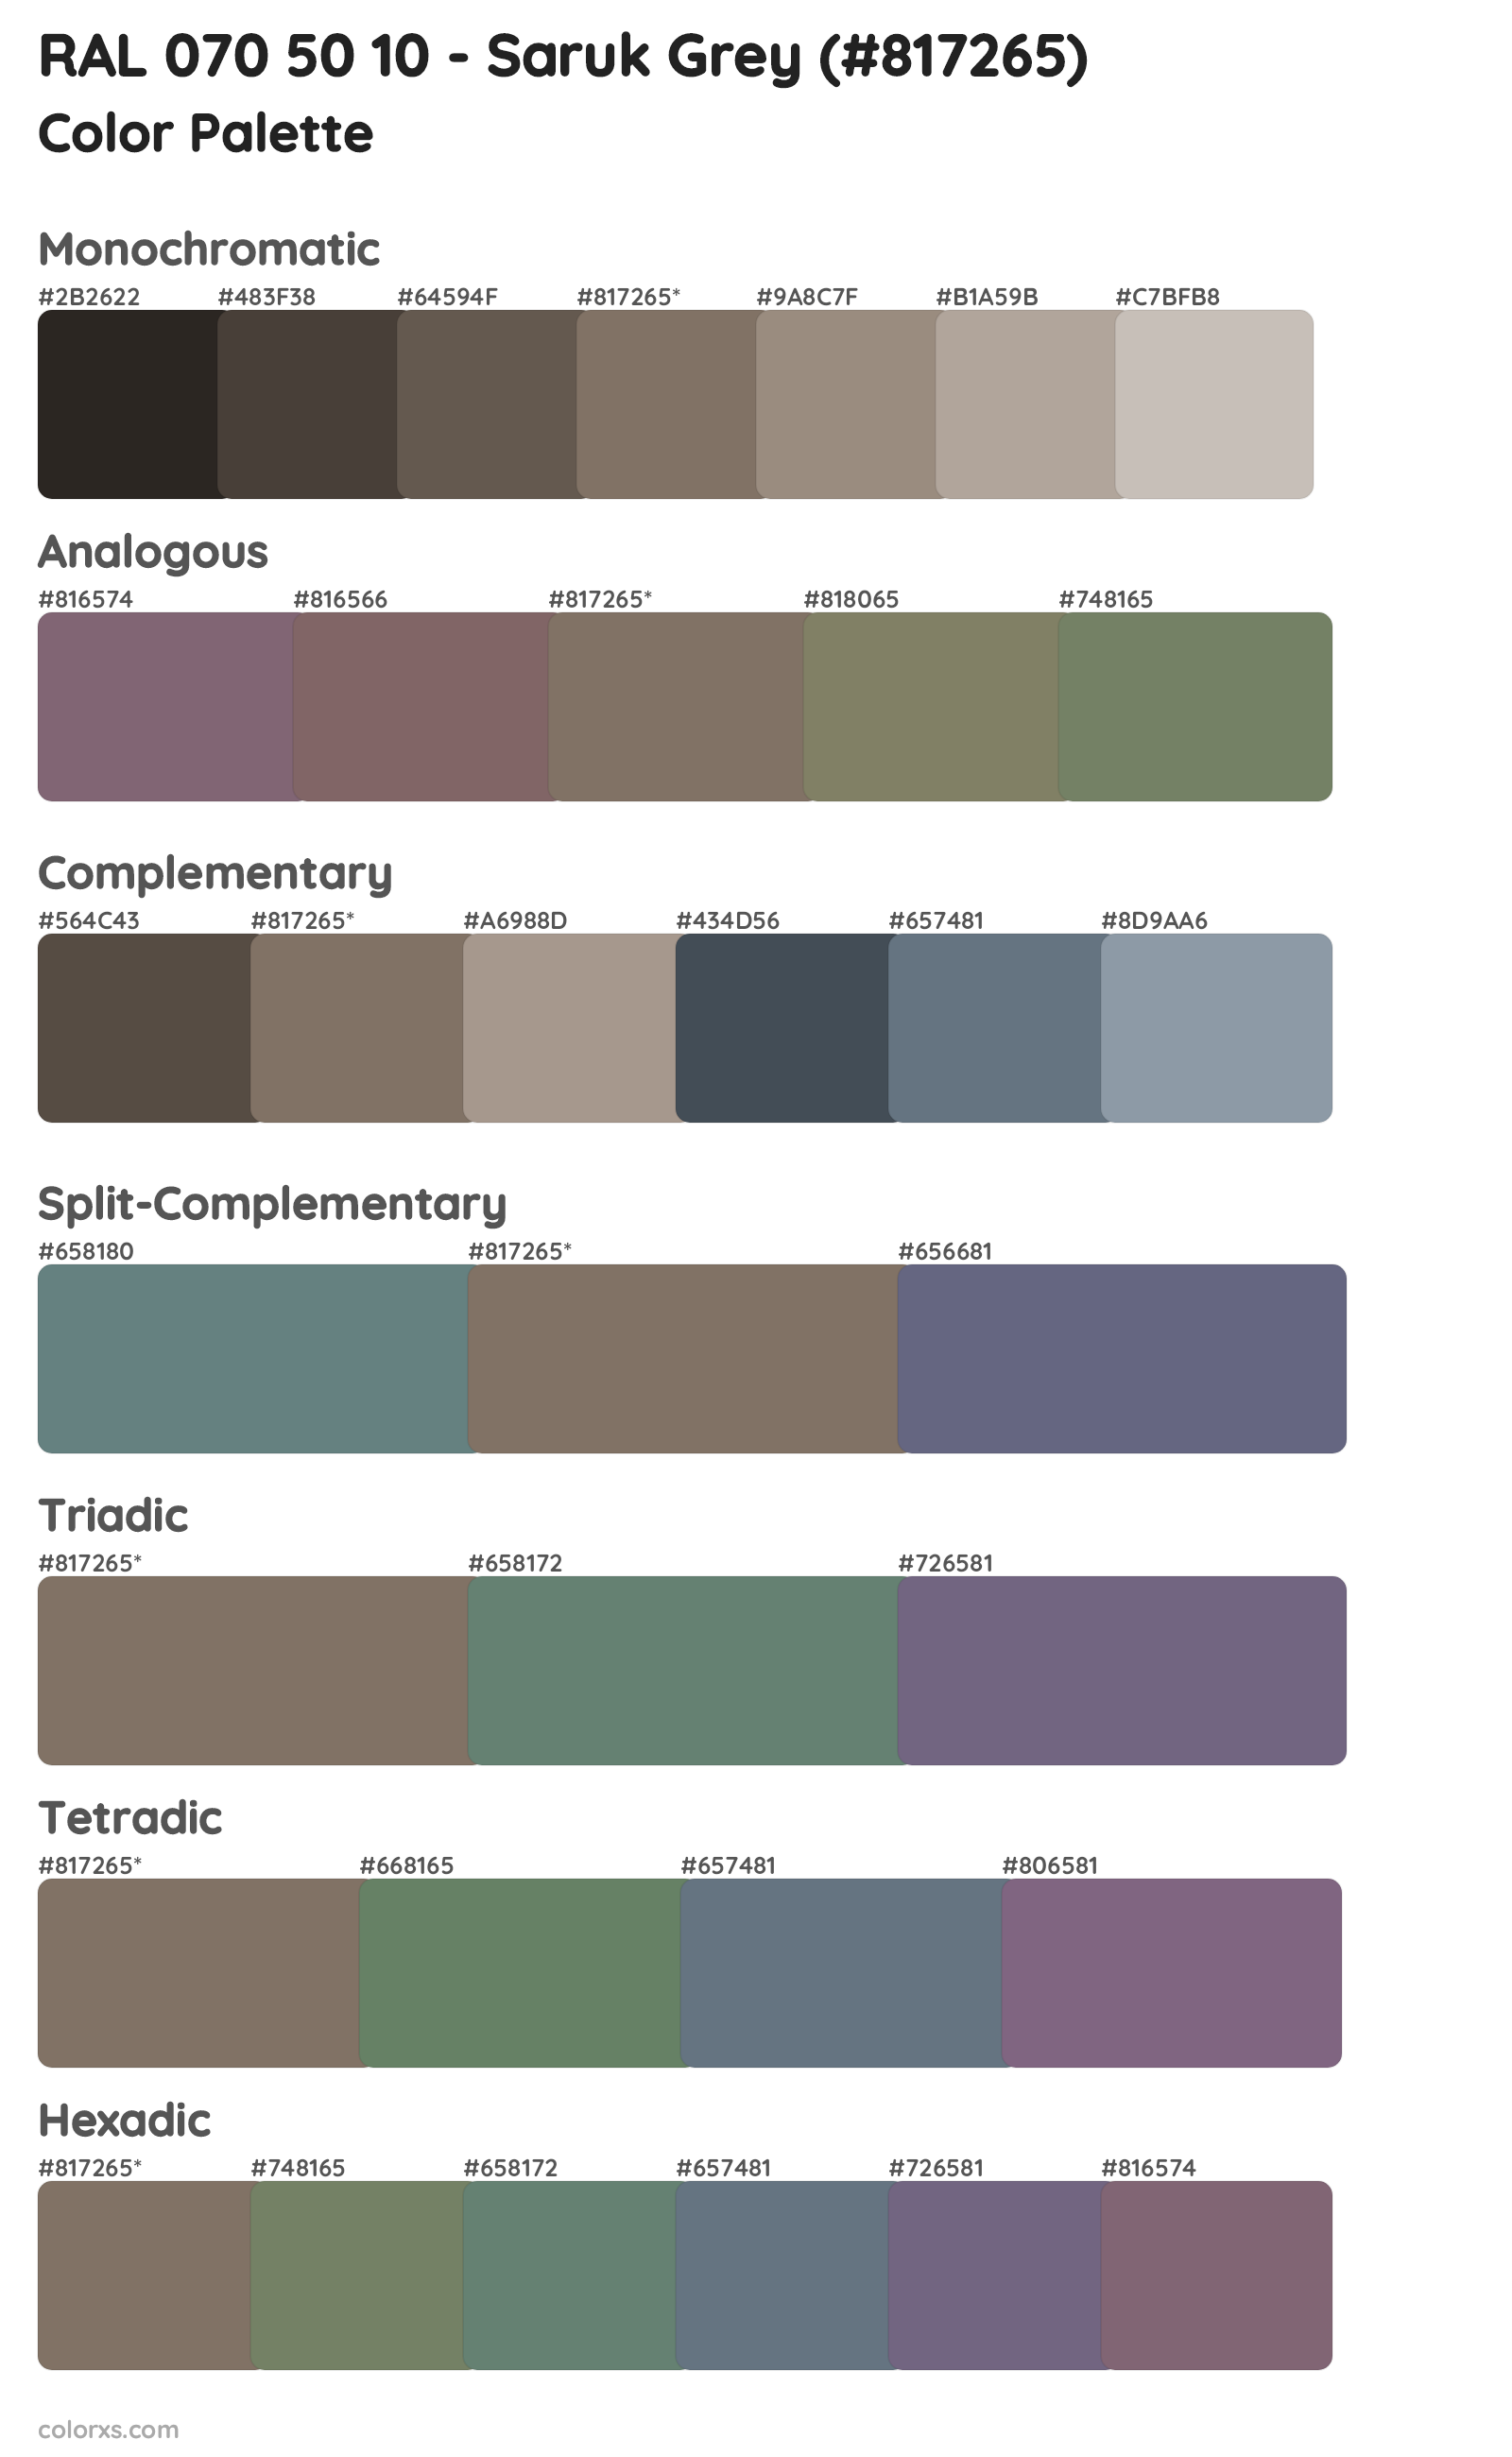 RAL 070 50 10 - Saruk Grey Color Scheme Palettes